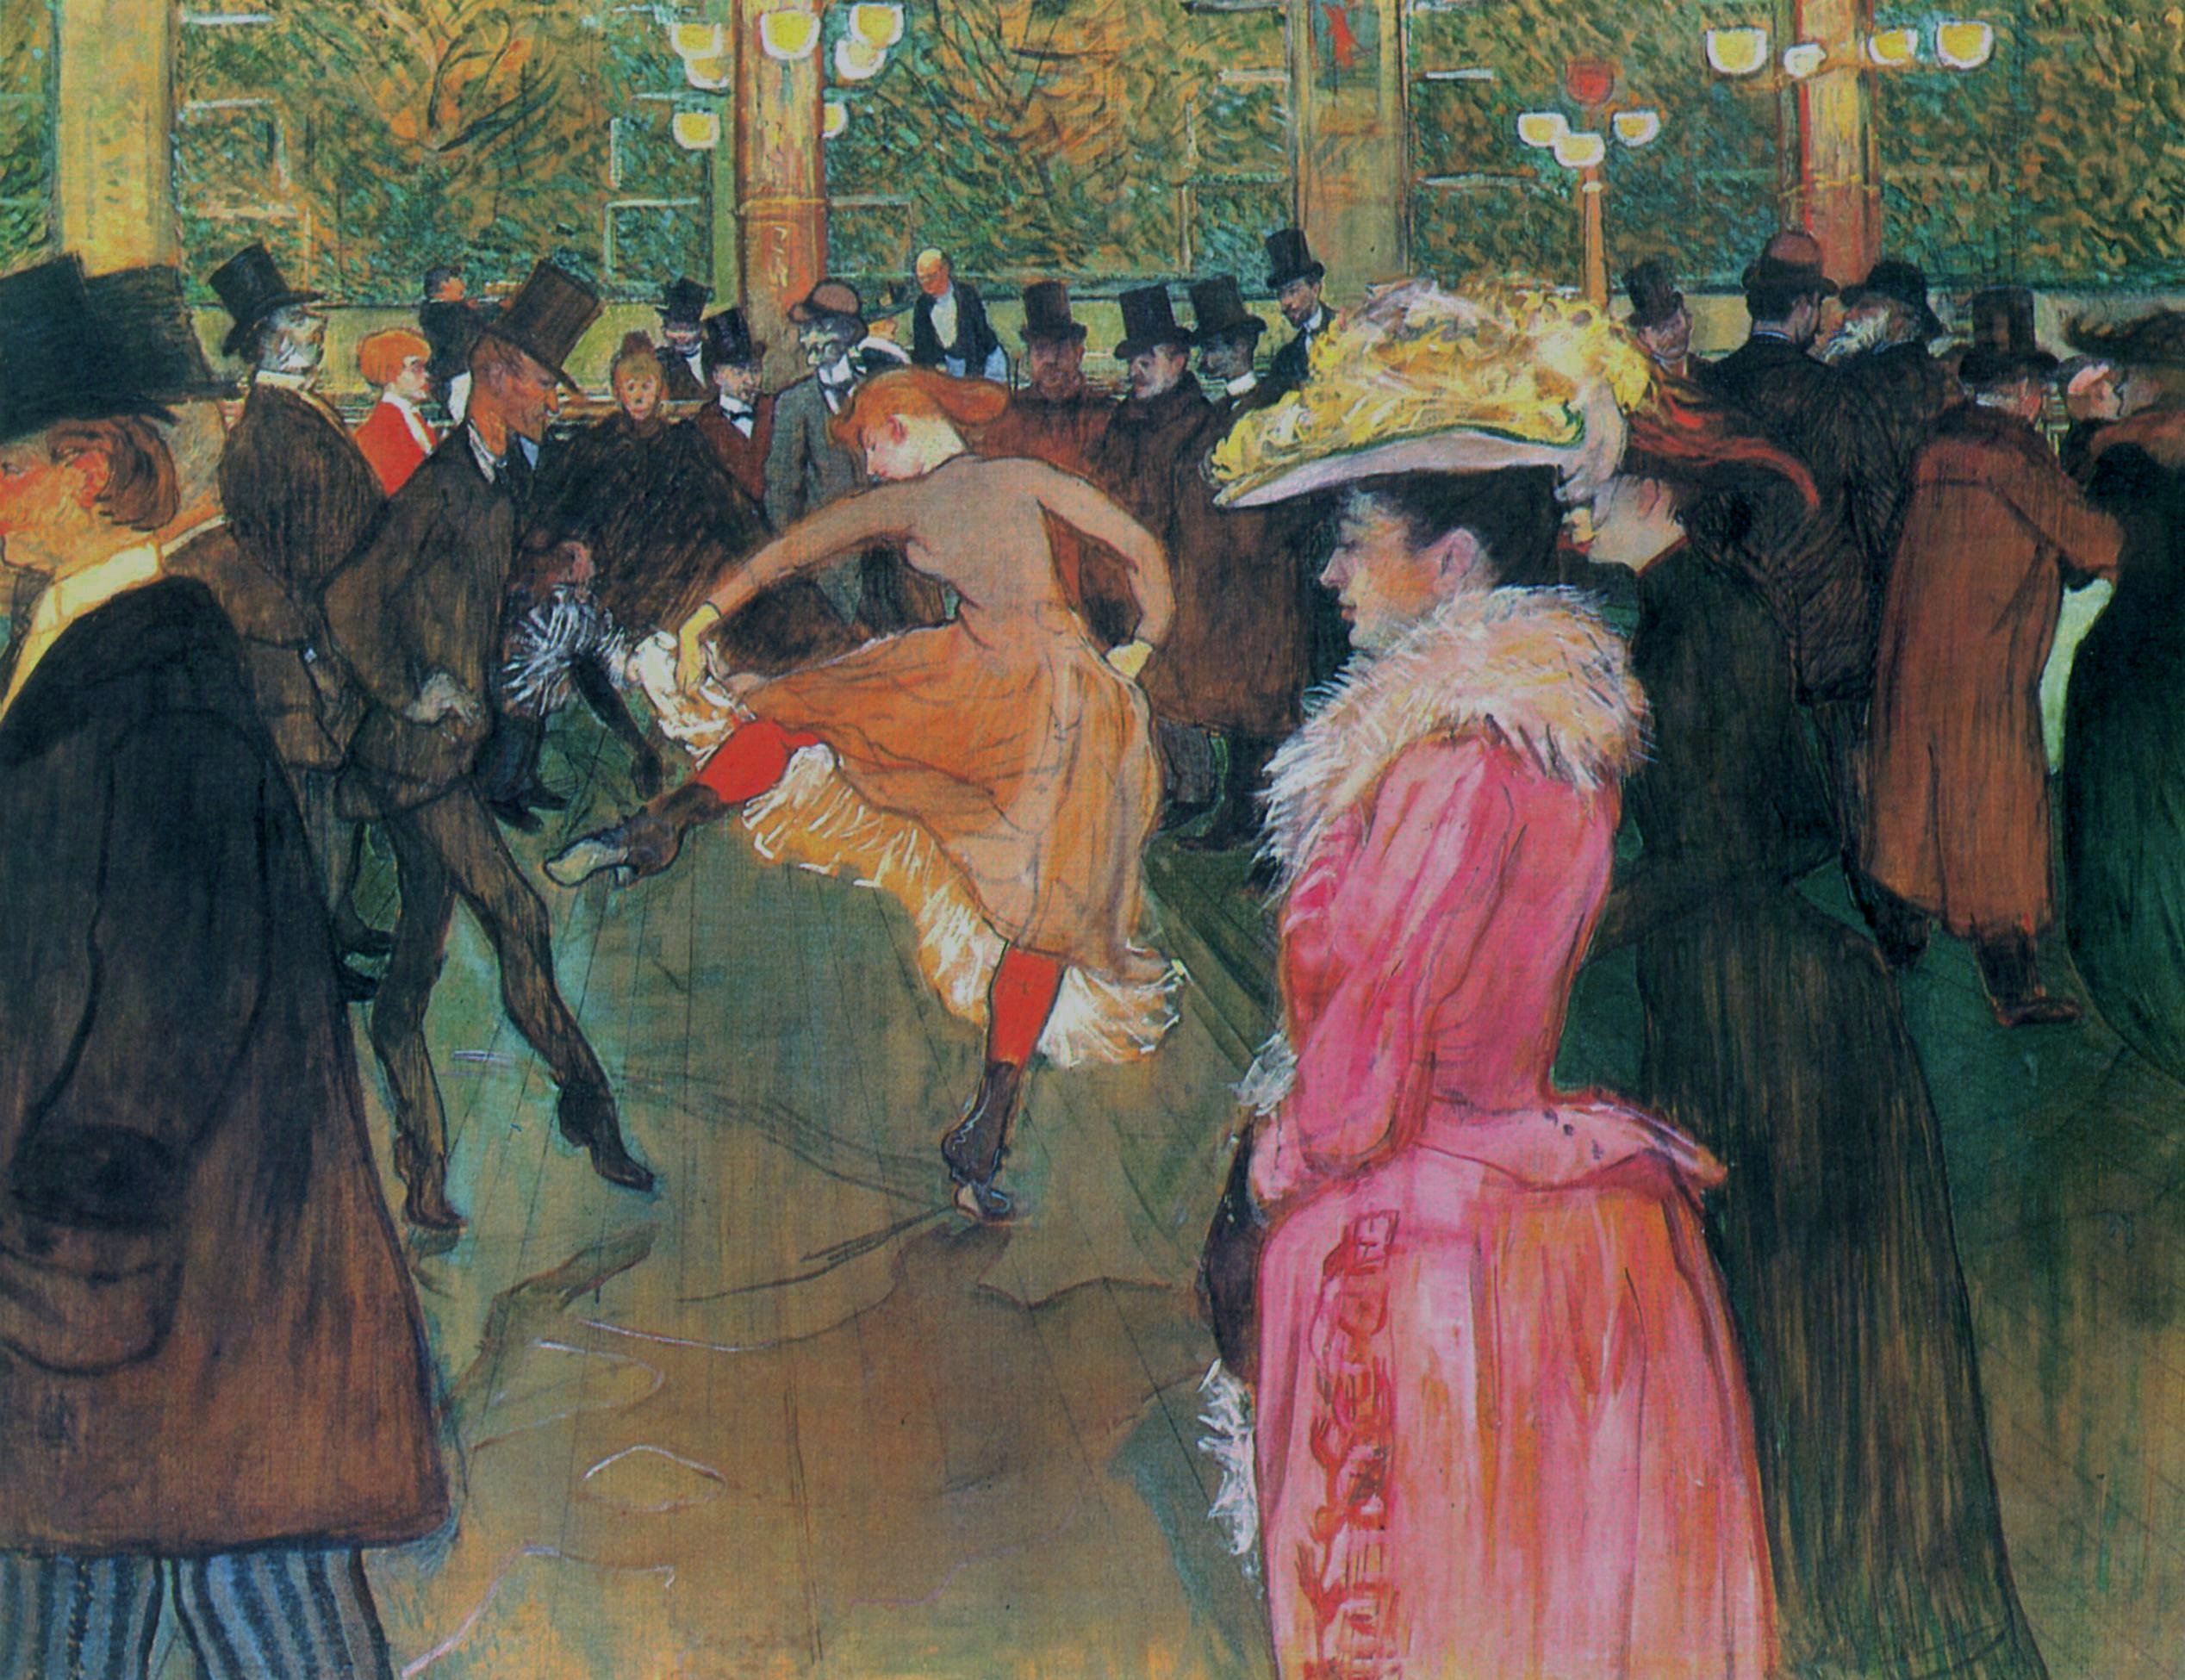 紅磨坊舞會 by Henri de Toulouse-Lautrec - 1890 - 115,5 × 150 公分 